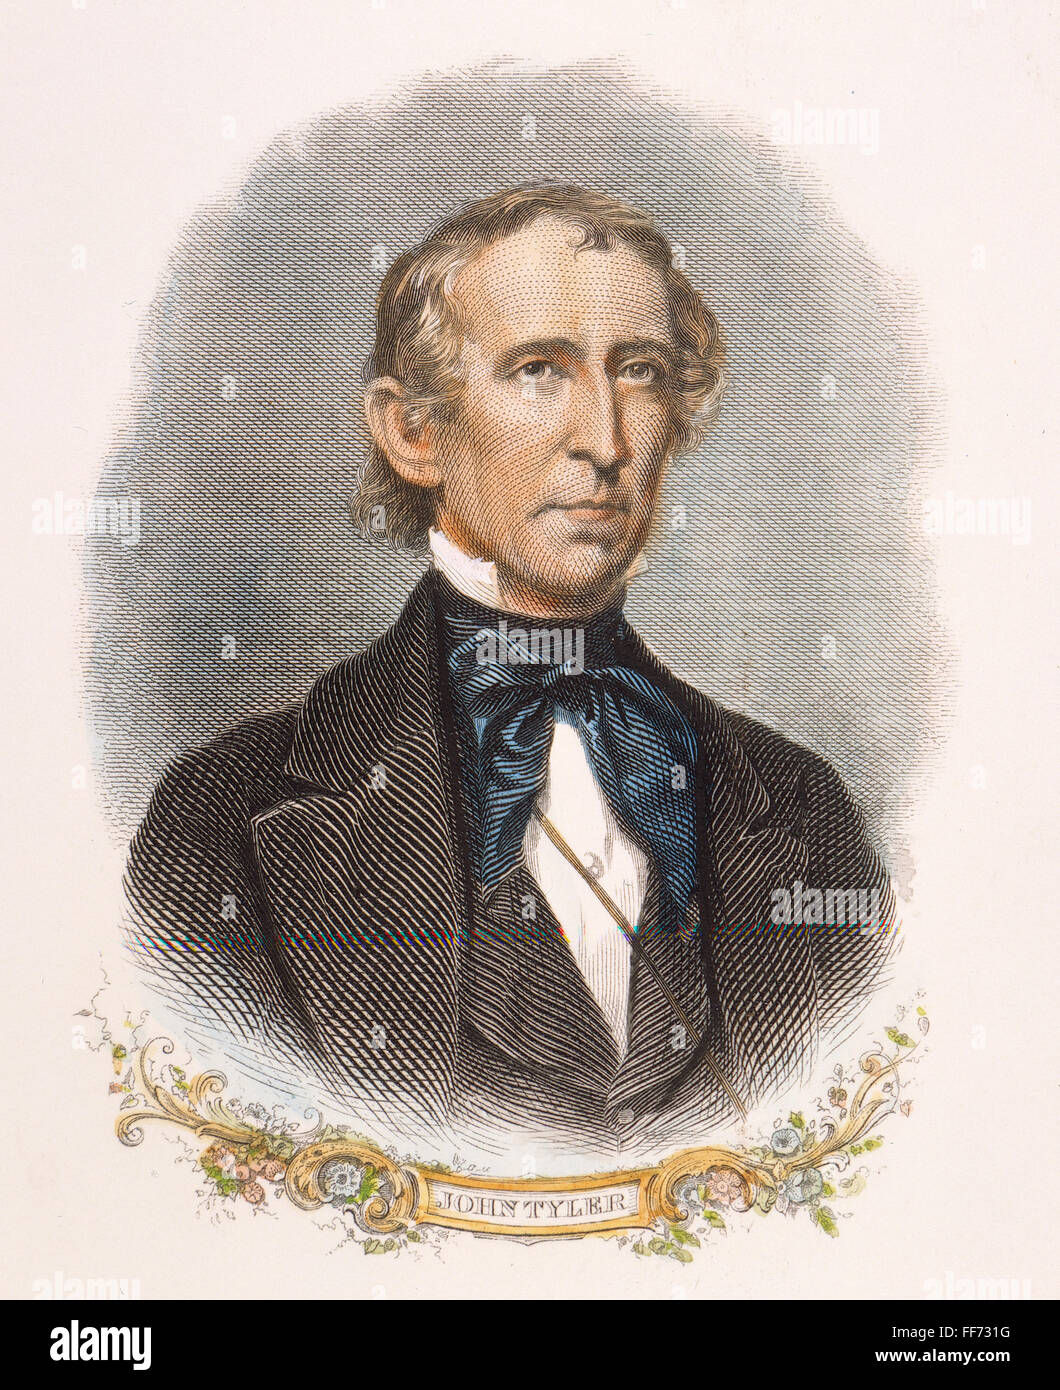 JOHN TYLER (1790-1862) : /nengraving, 19e siècle. Banque D'Images